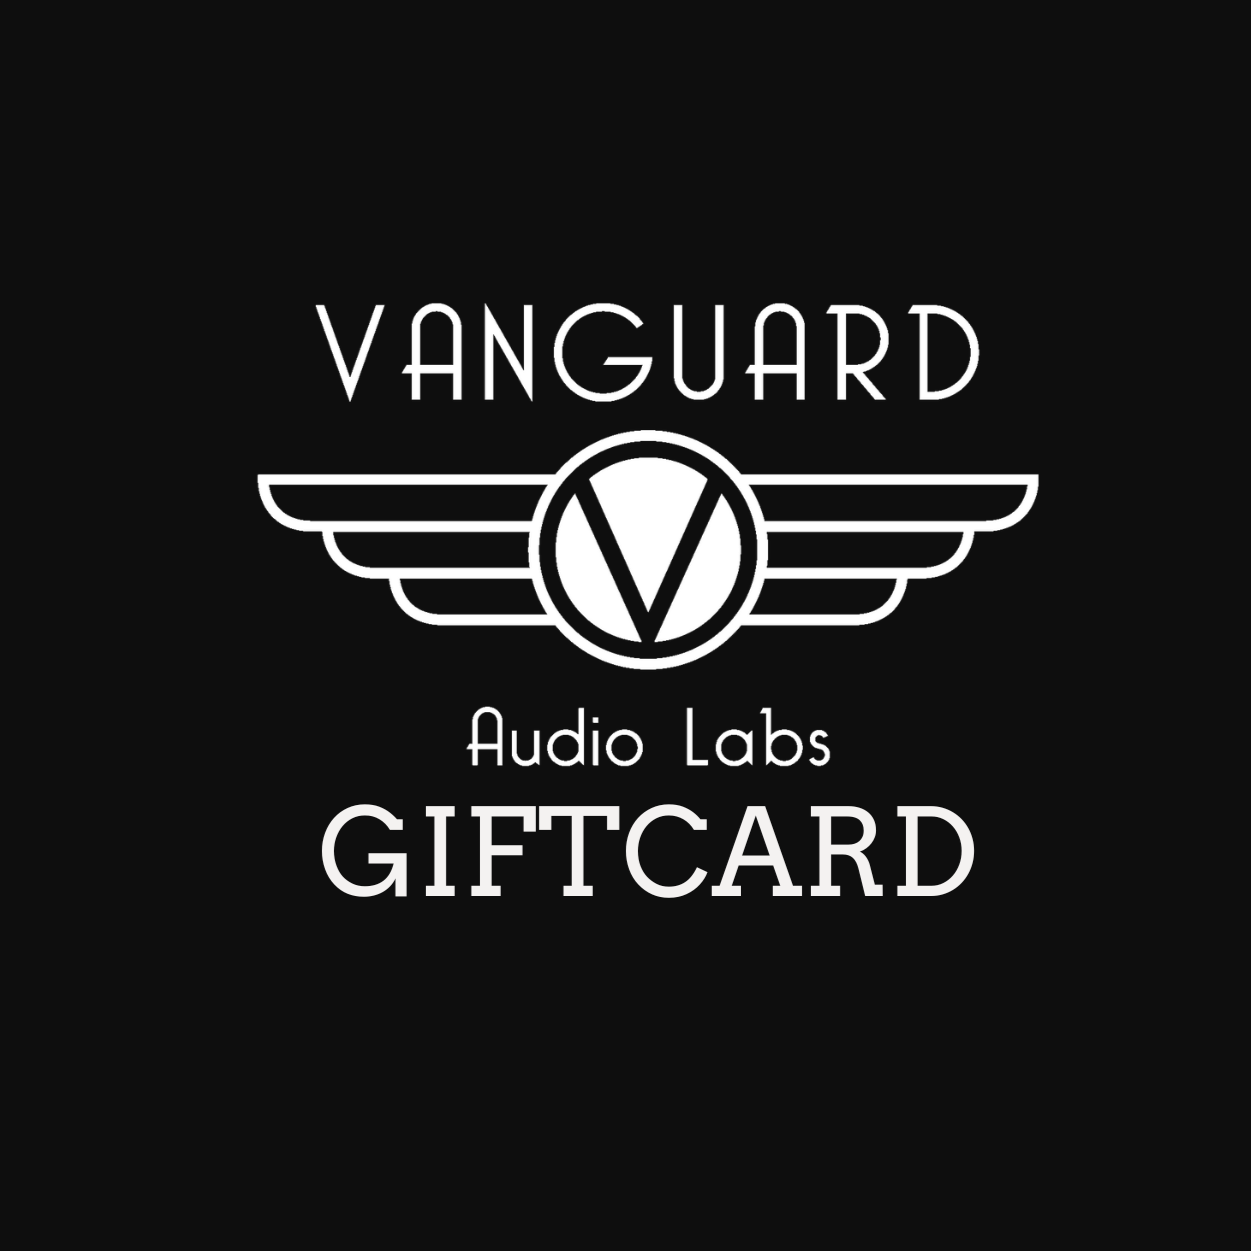 Gift Card - Vanguard Audio Labs